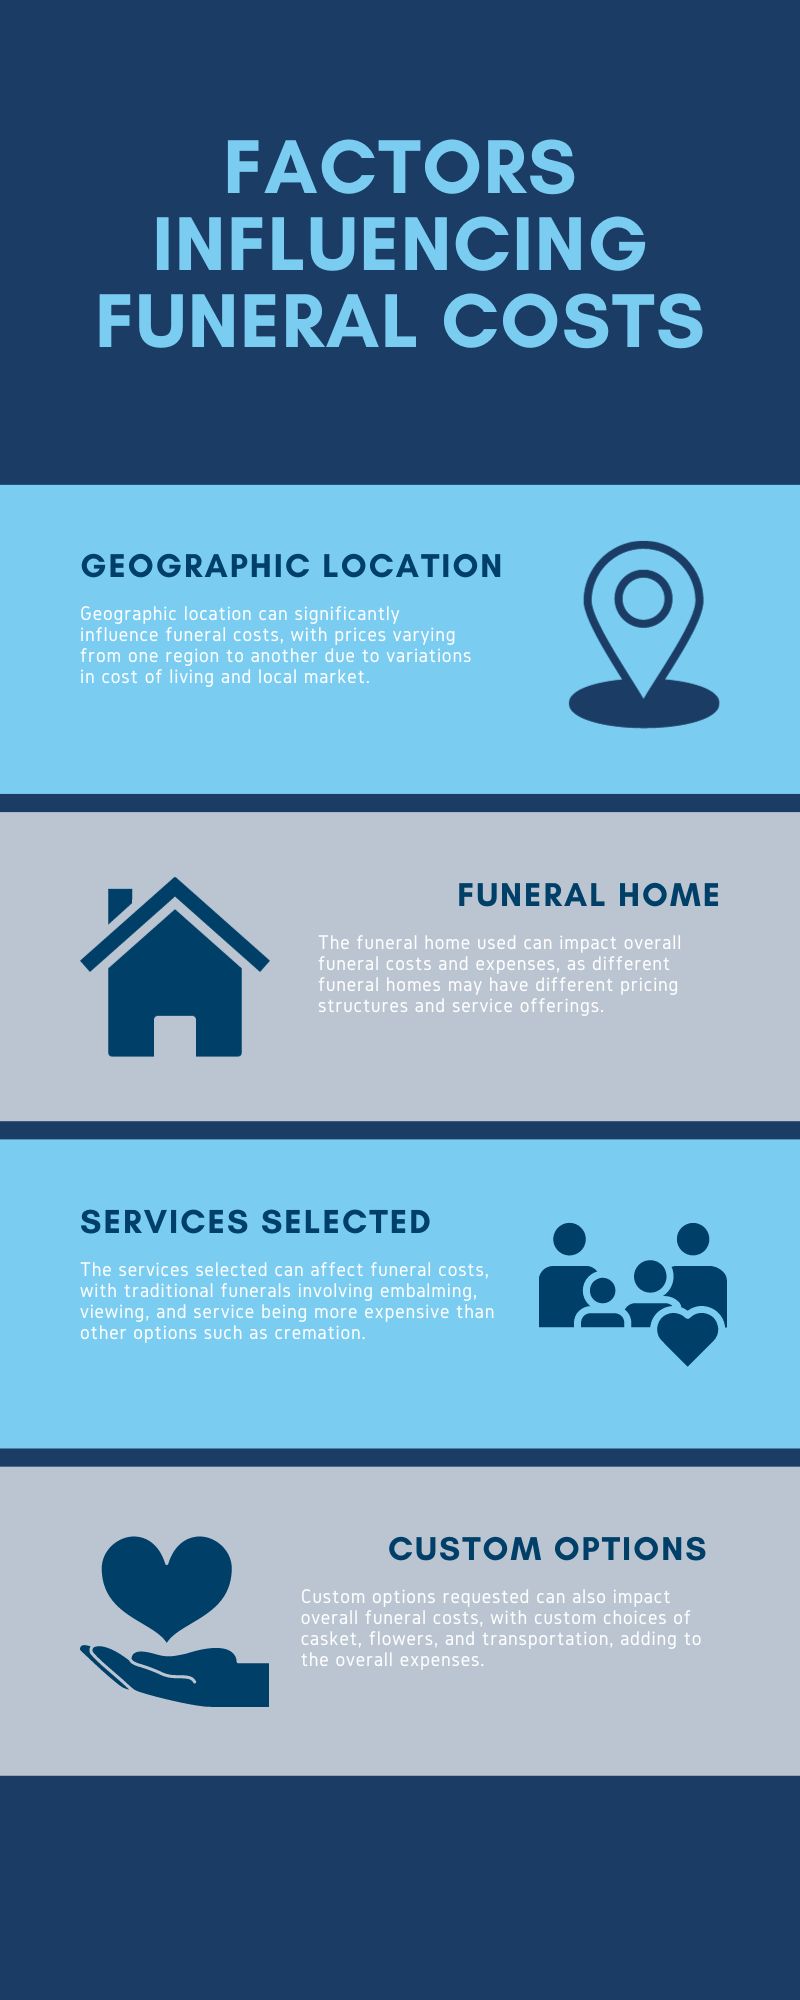 Factors Influencing Funeral Costs infographic